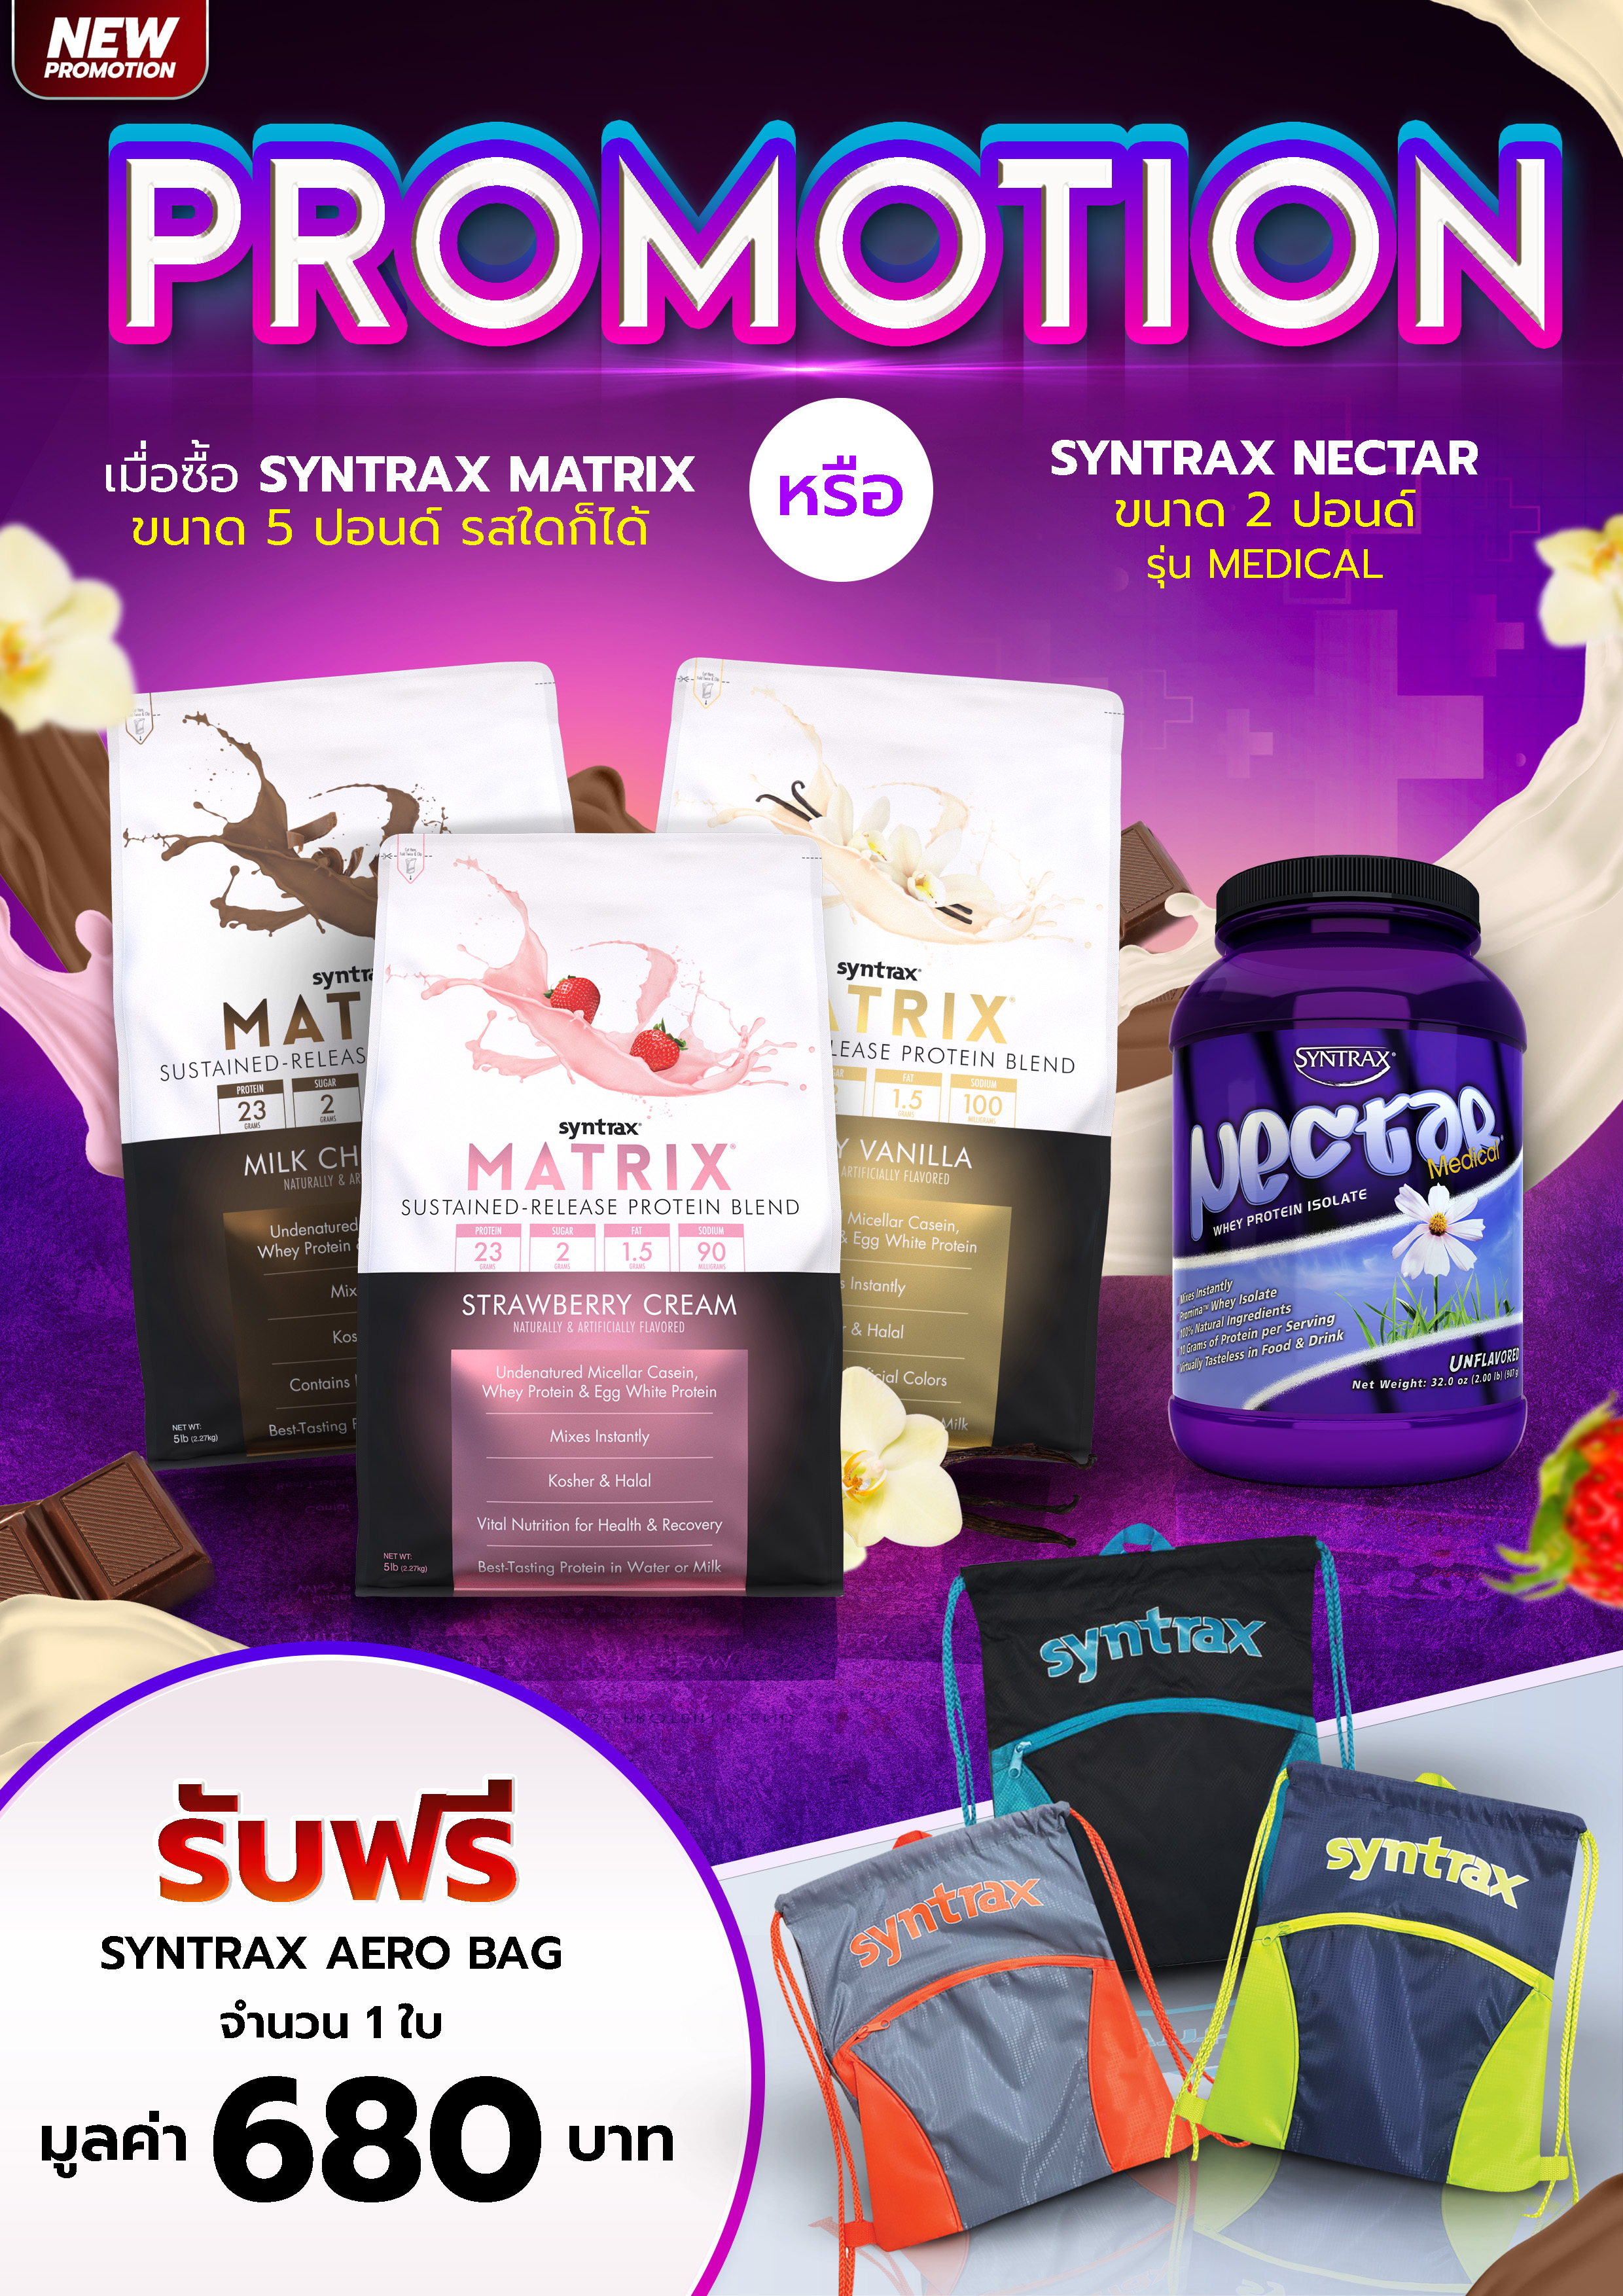 Promotion เมื่อซื้อ Syntrax Matrix ขนาด 5 ปอนด์ หรือ Syntrax Nectar Medical รับฟรี Syntrax Aero Bag จำนวน 1 ใบ